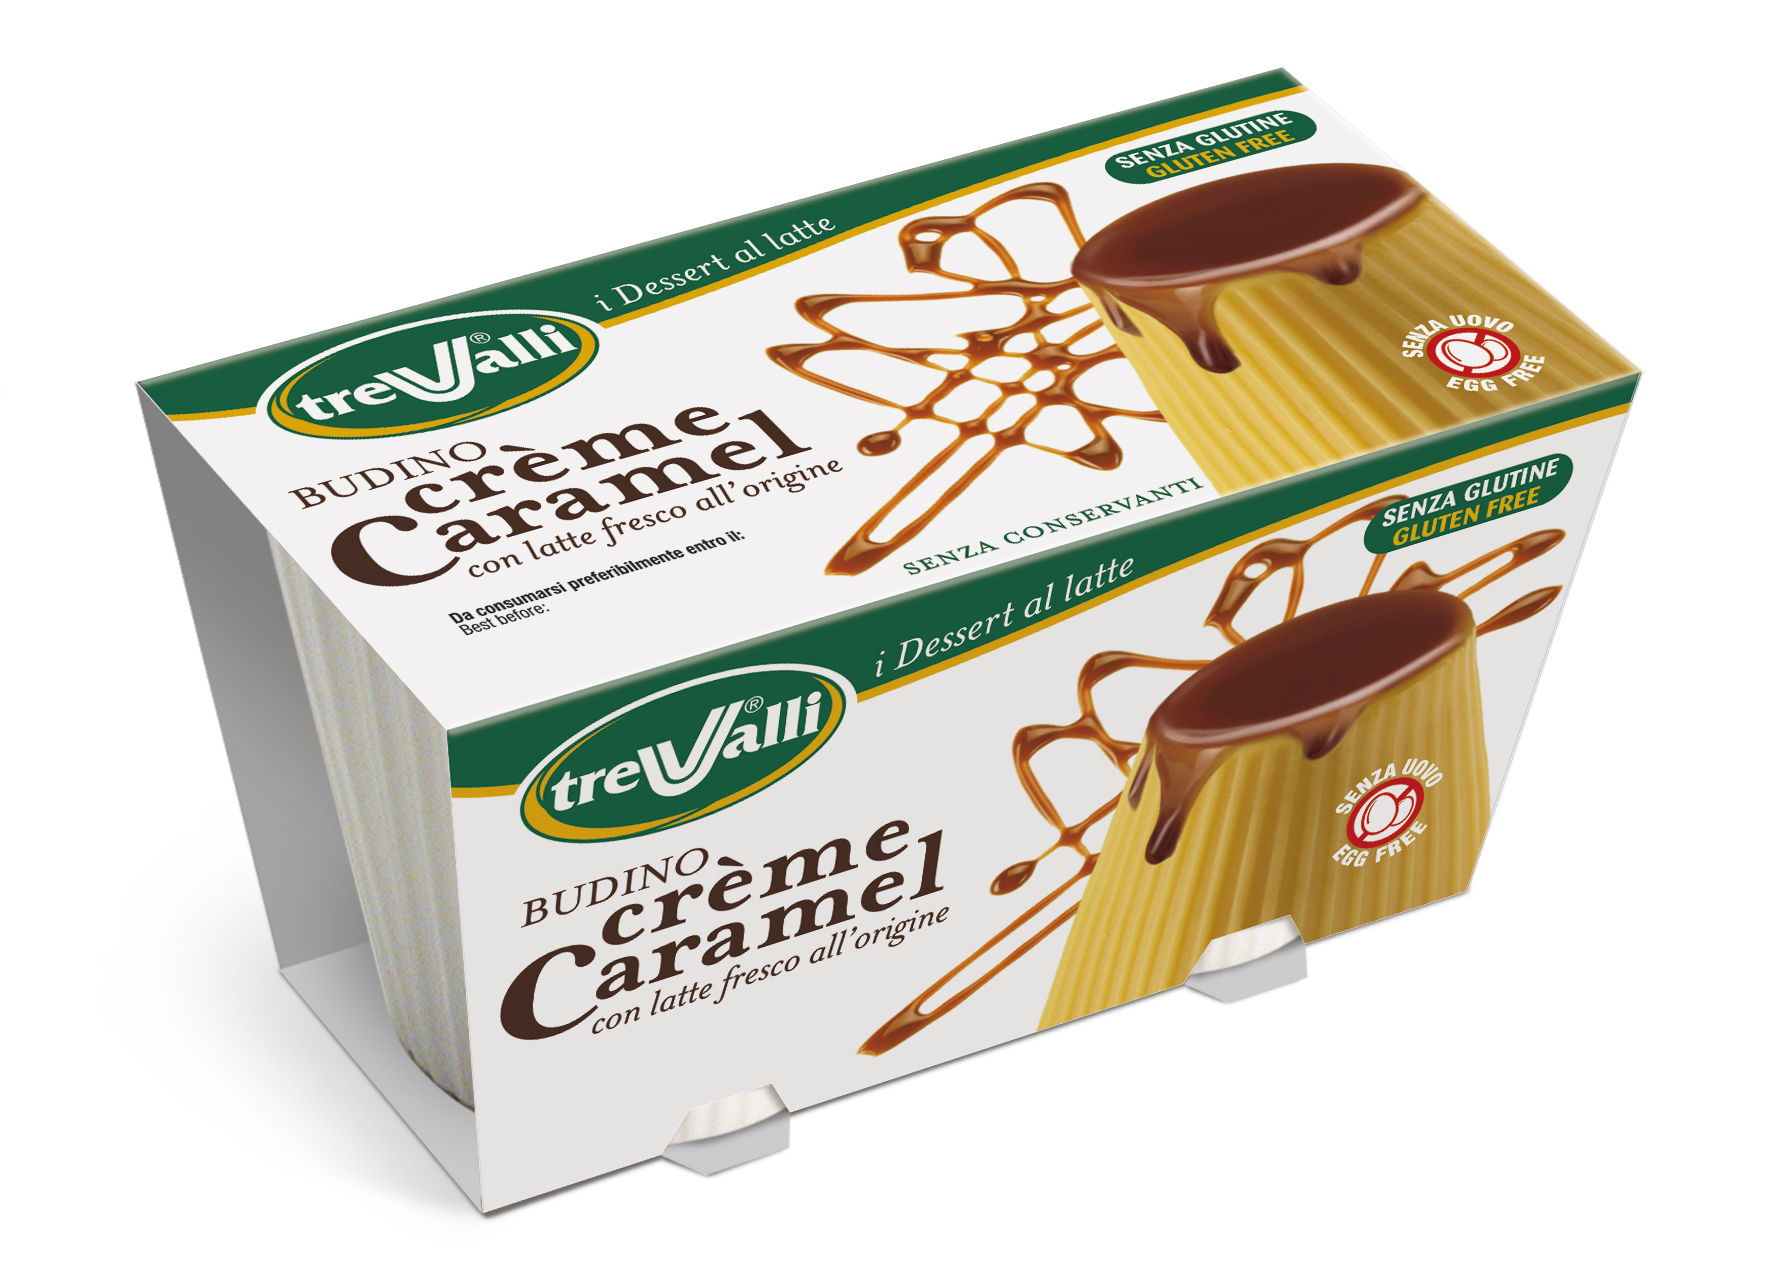 Budino al Crème Caramel Trevalli